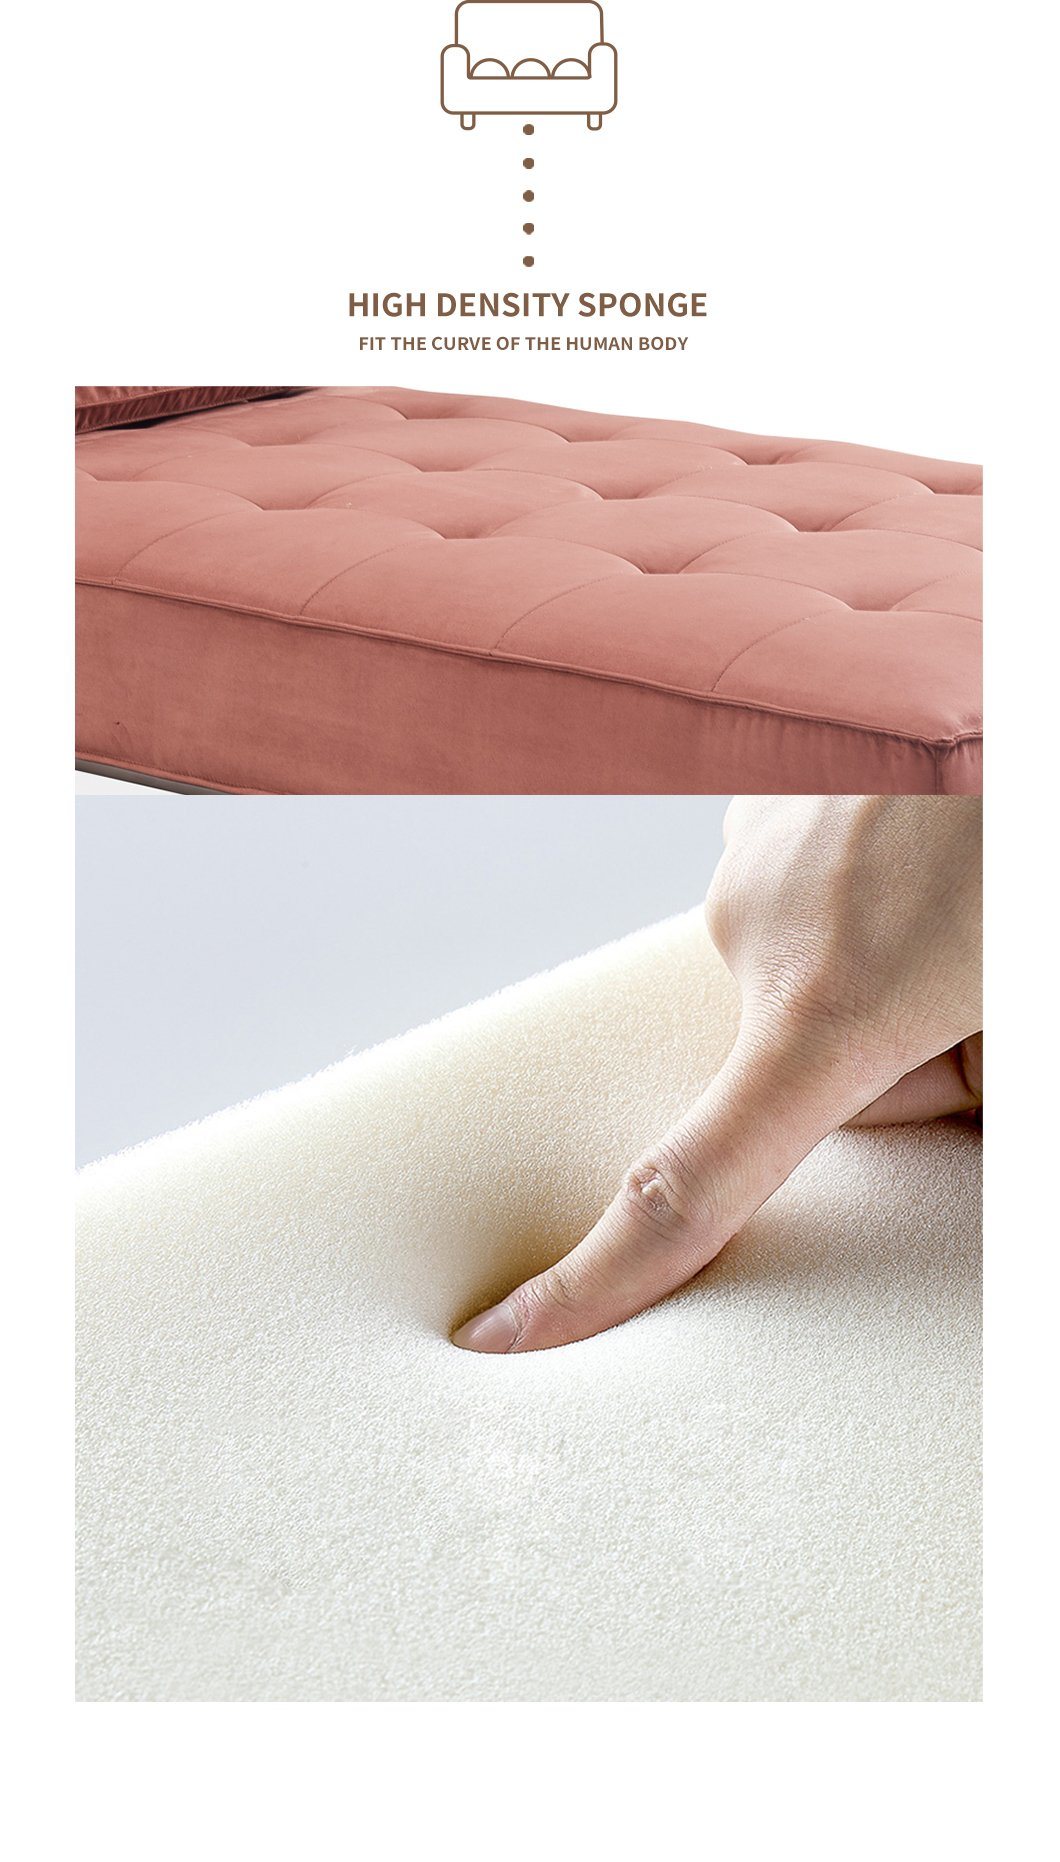 2022 New Technology Cloth Modern Fabric Living Room Sofa Home Furniture